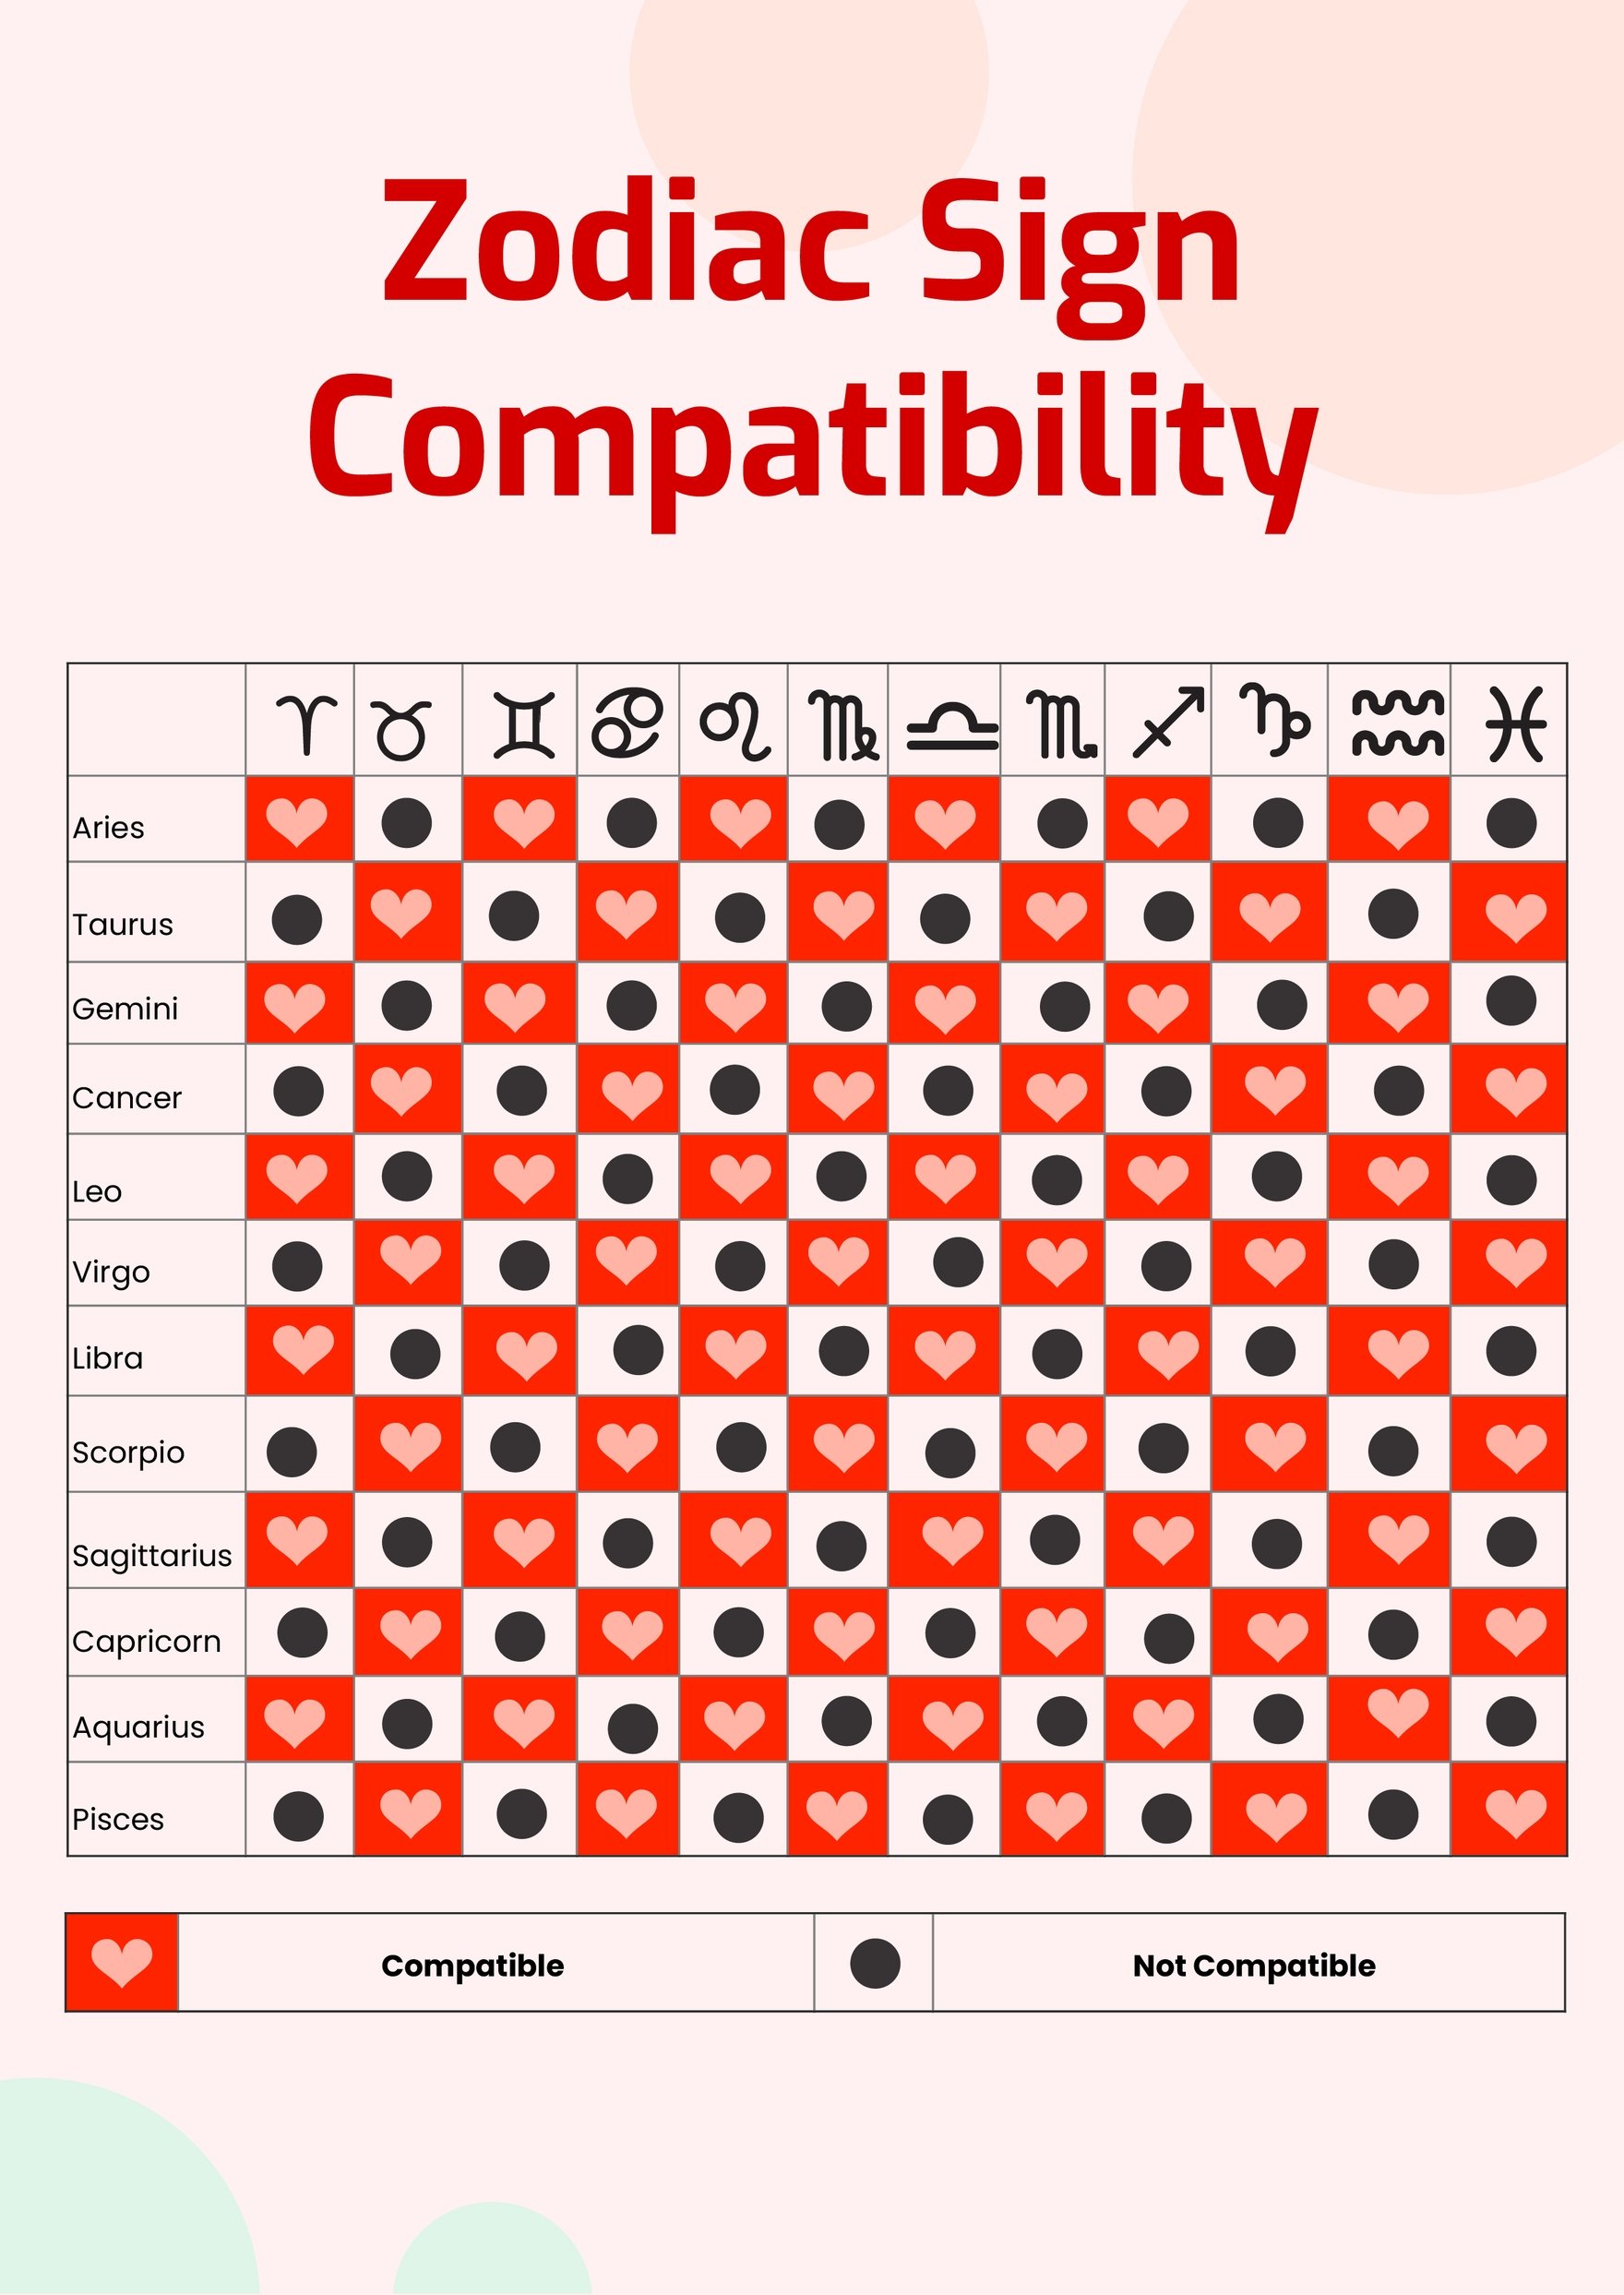 Couple's Compatibility Chart in PDF, Illustrator